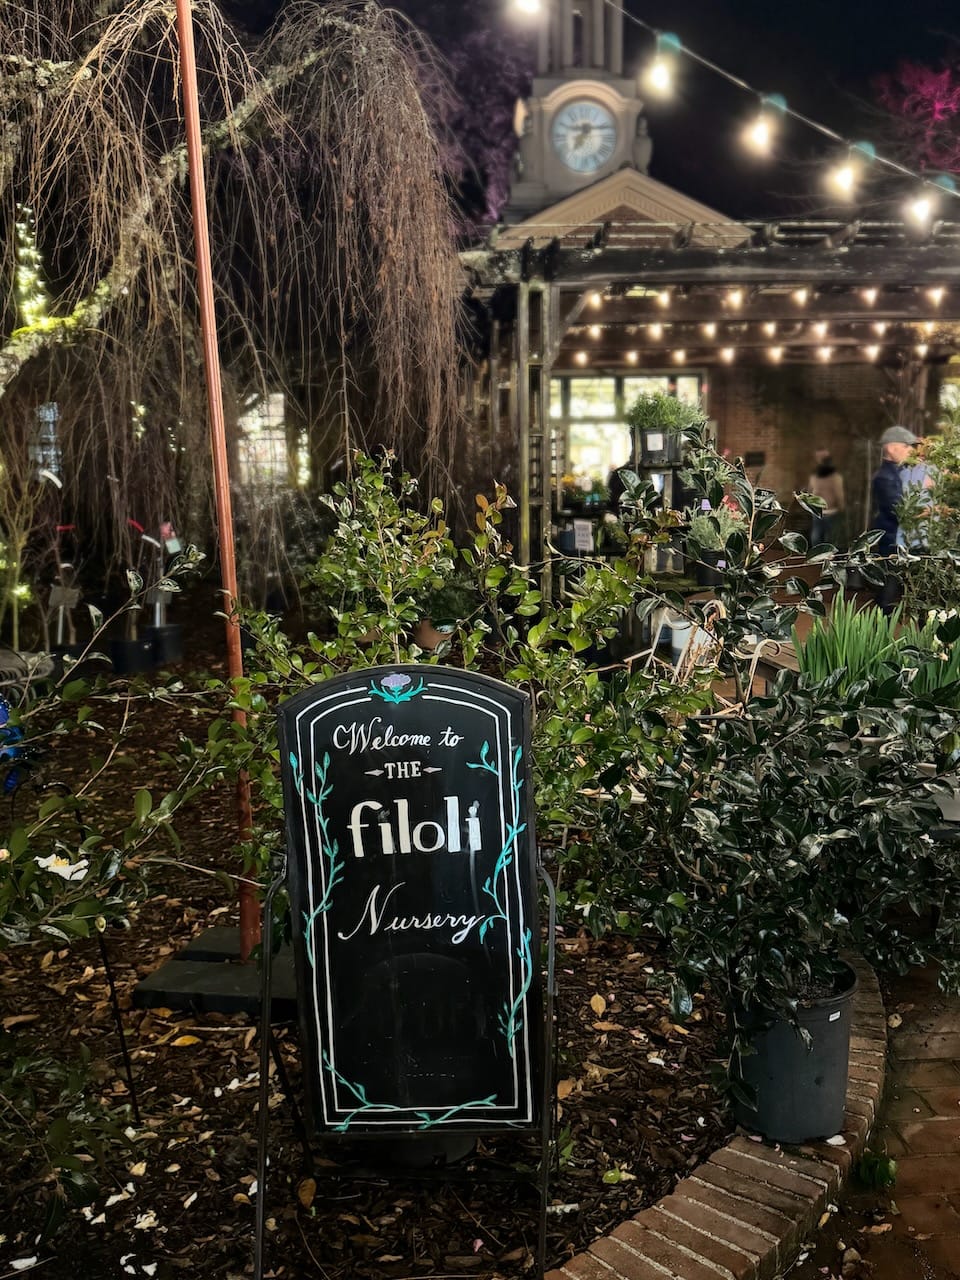 Lighting Up Memories: A Night at Filoli